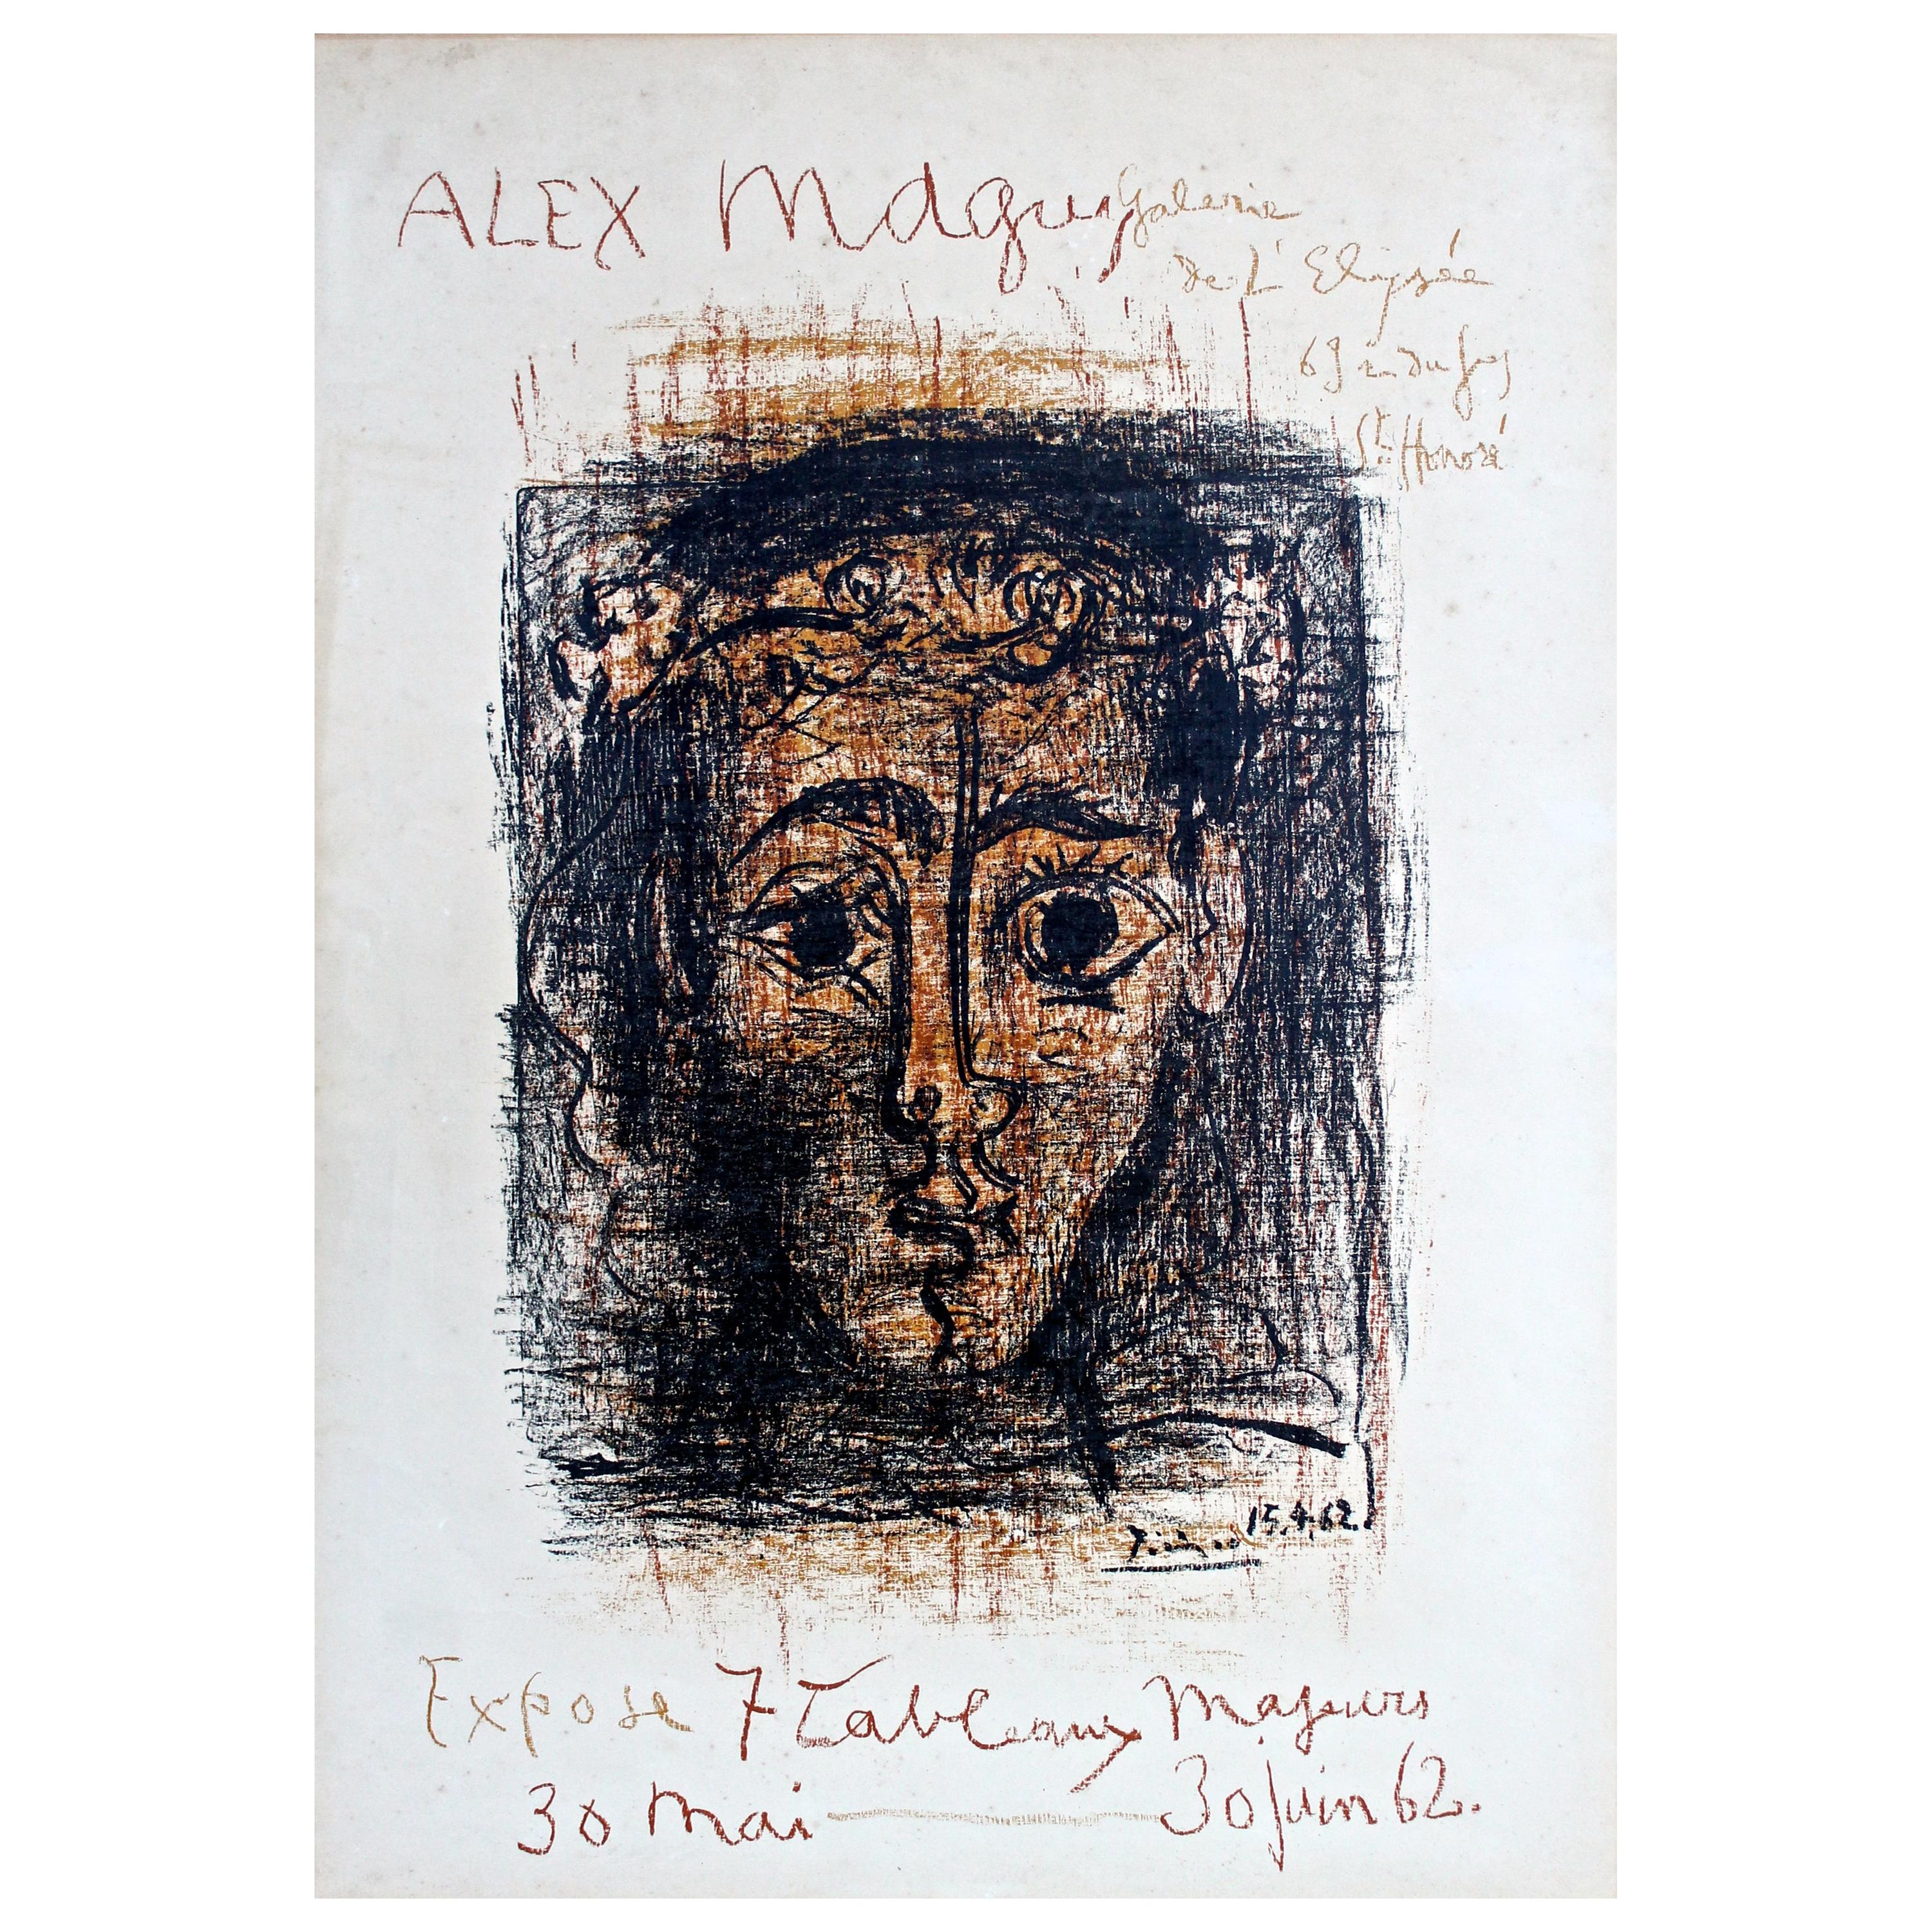 Pablo Picasso Poster original Mourlot  lithograph for Alex Maguy, 1962